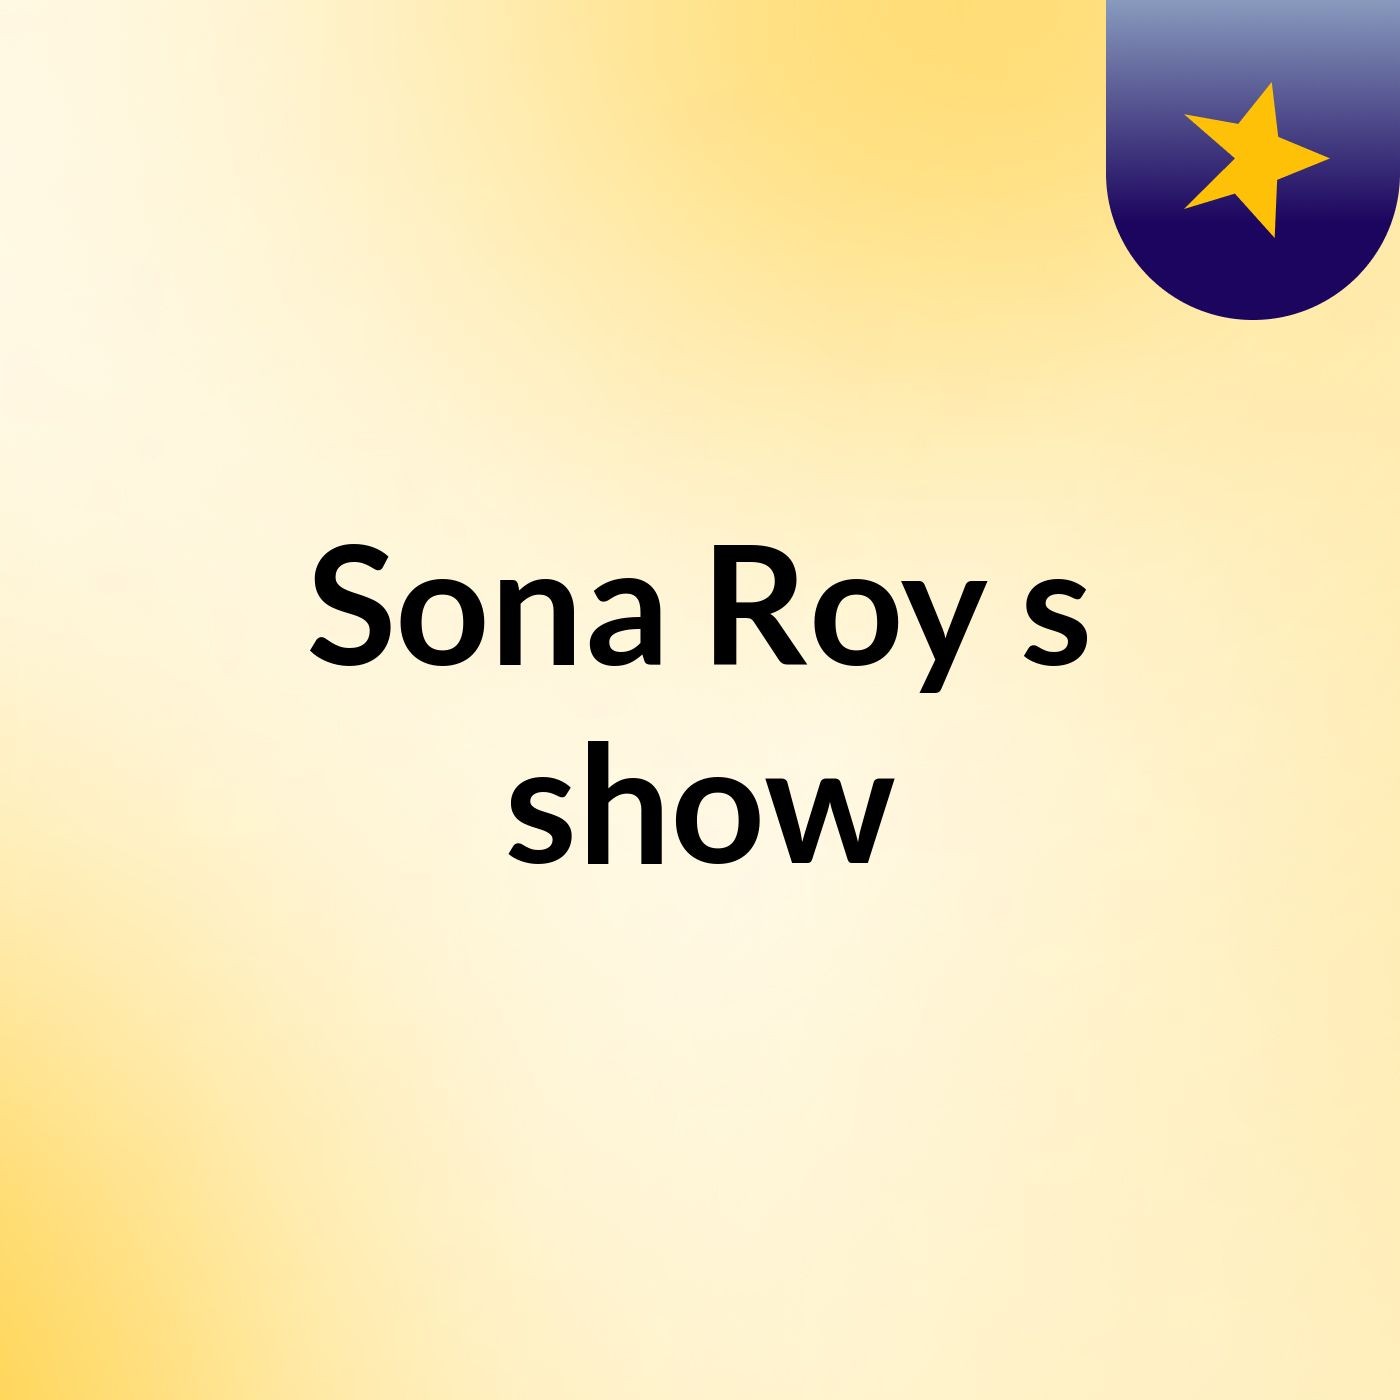 Sona Roy's show